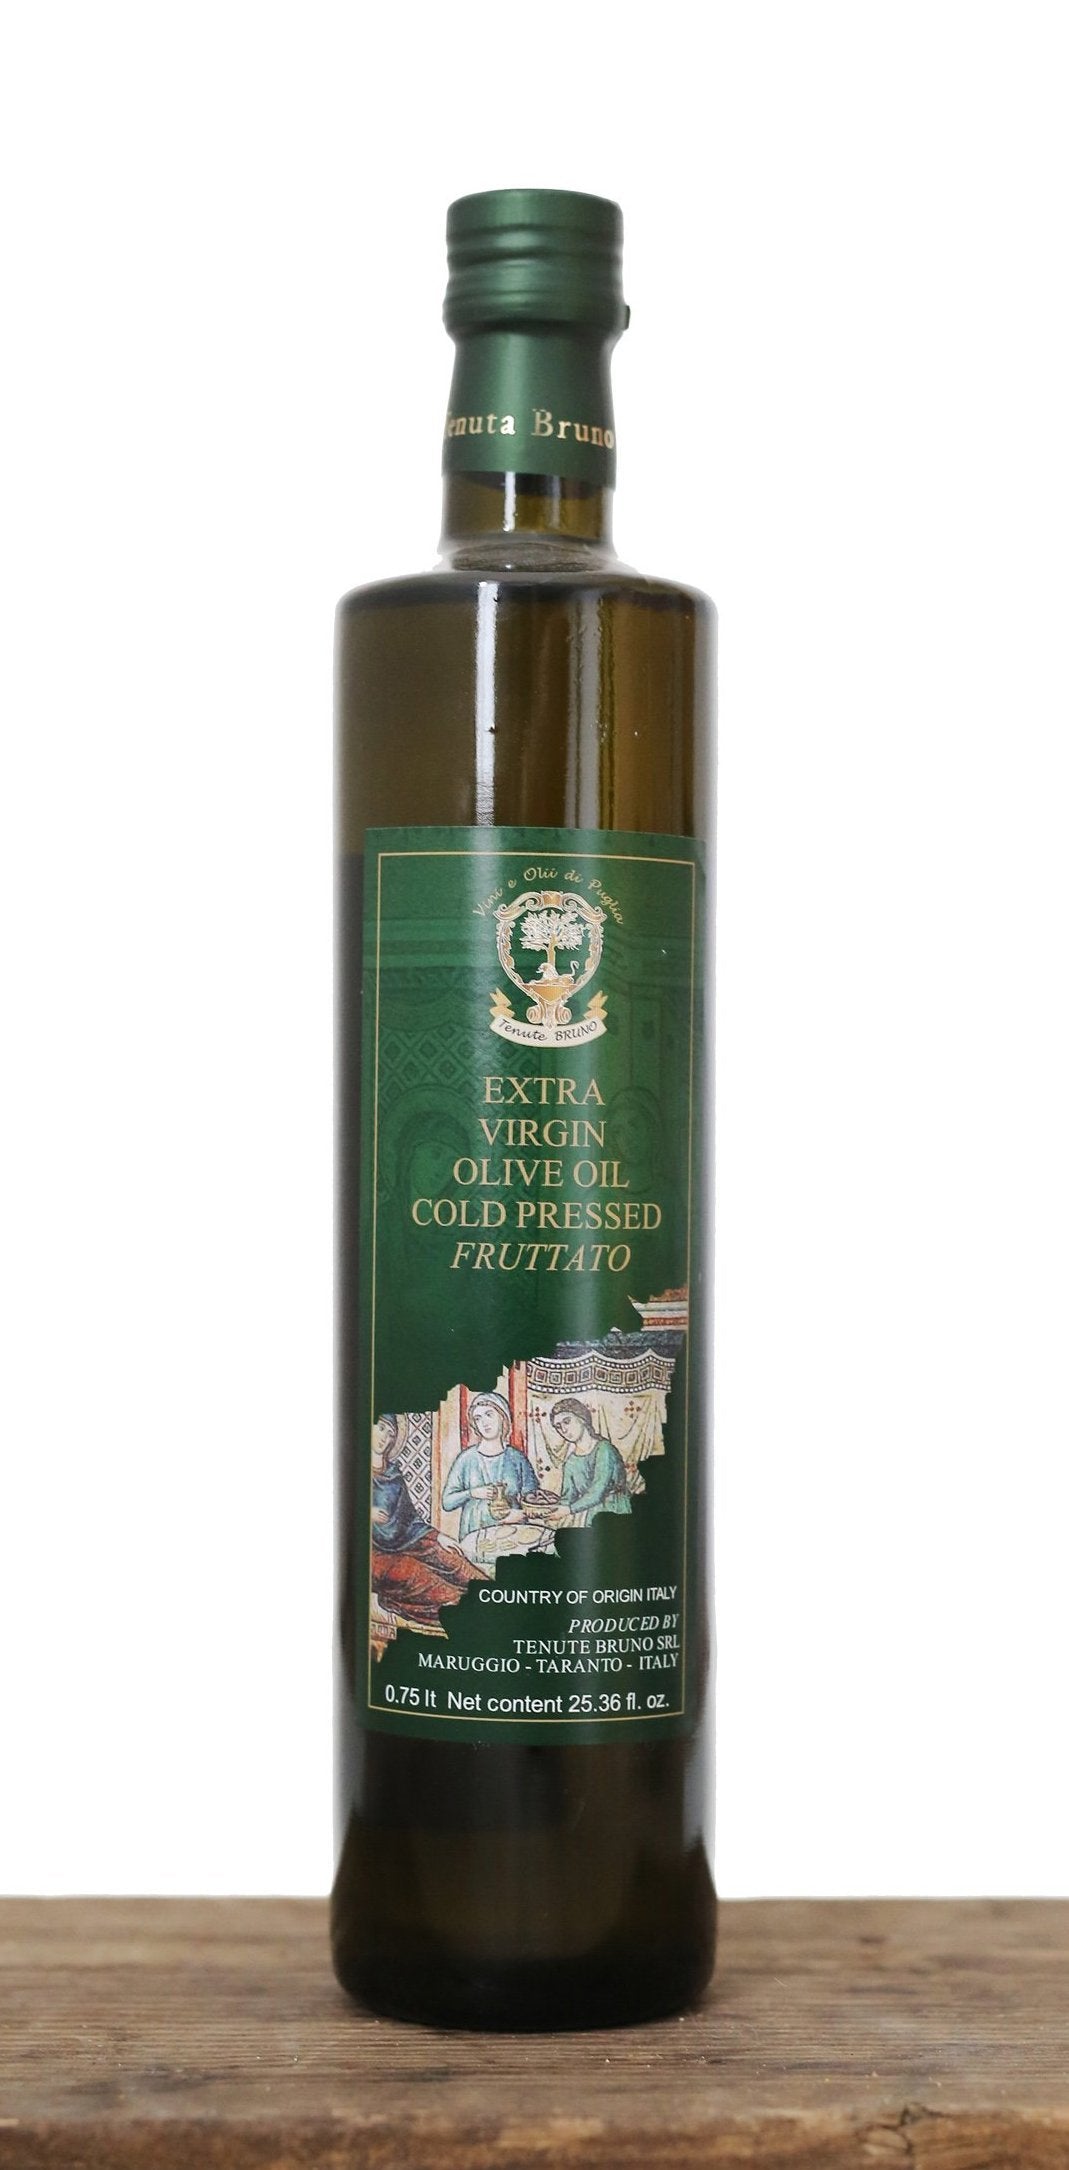 Extra Virgin Olive Oil “Fruttato”